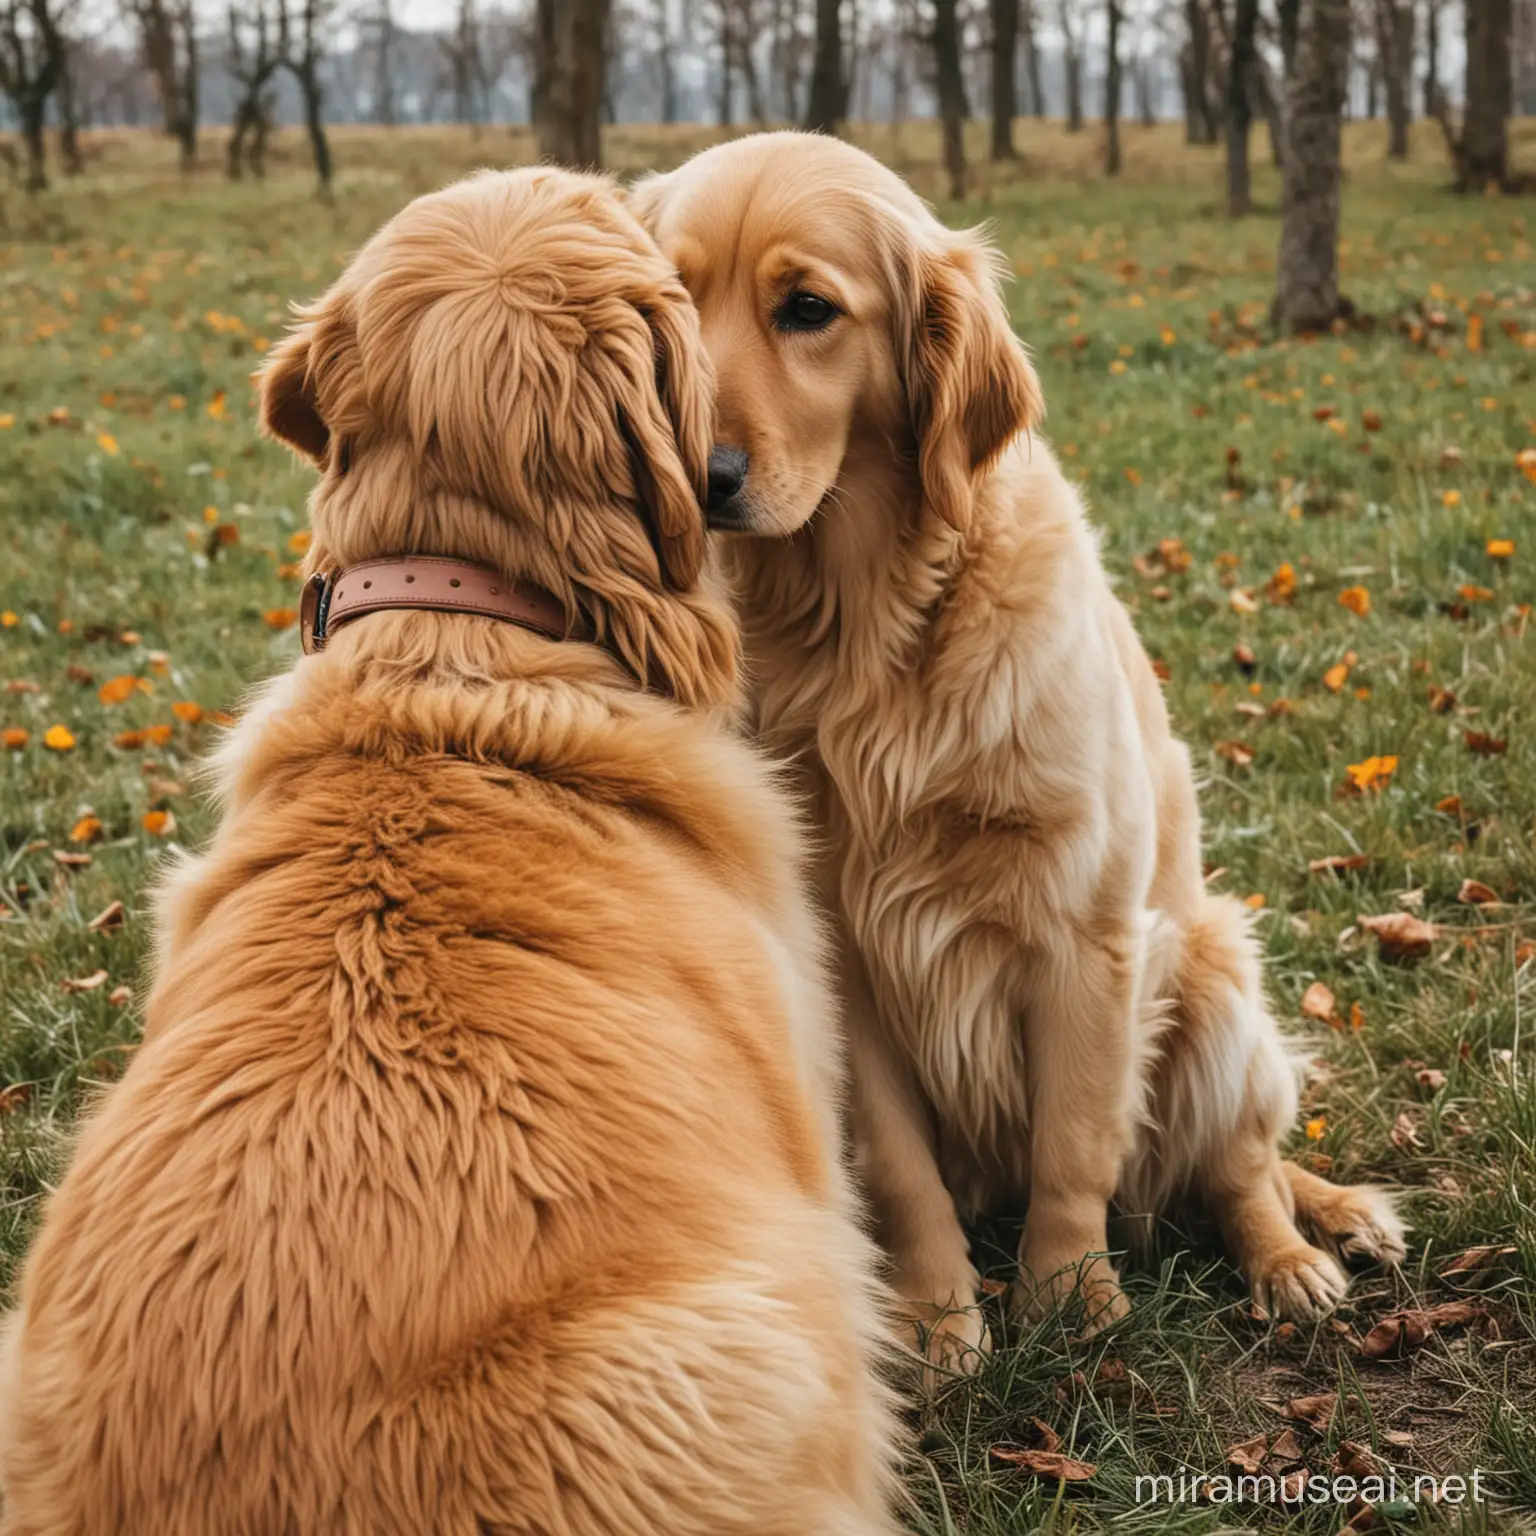 Loyal Companion Dogs Depict Humans Lack of Appreciation